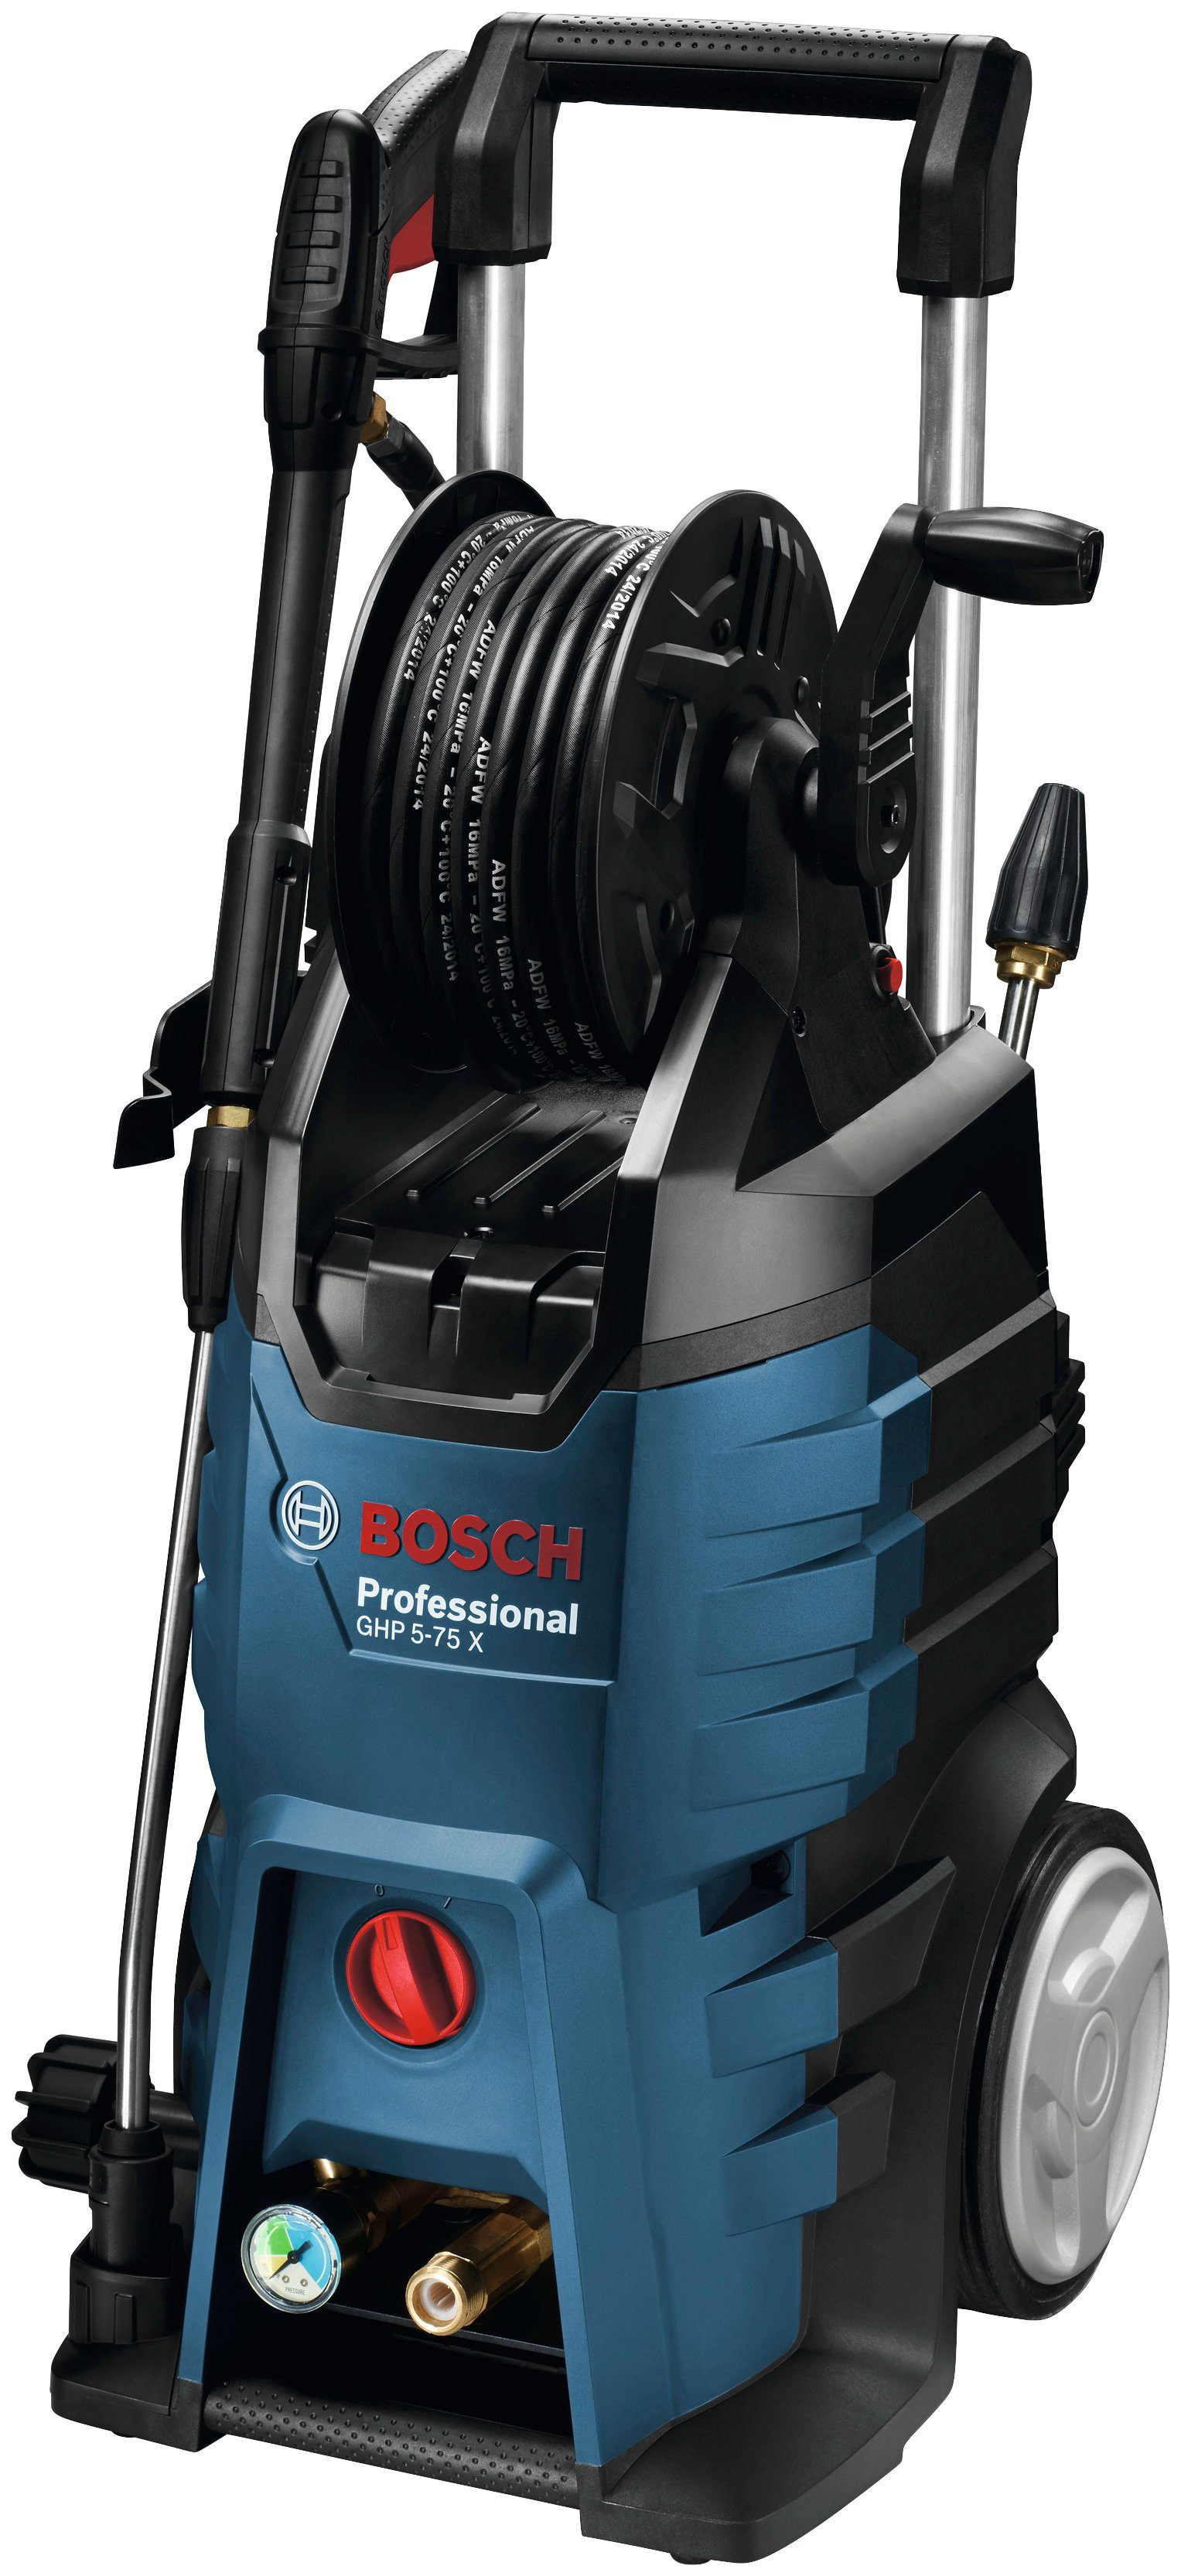 Bosch Professional Druck W Professional, max: Hochdruckreiniger 2600 bar, X 5-75 GHP 185